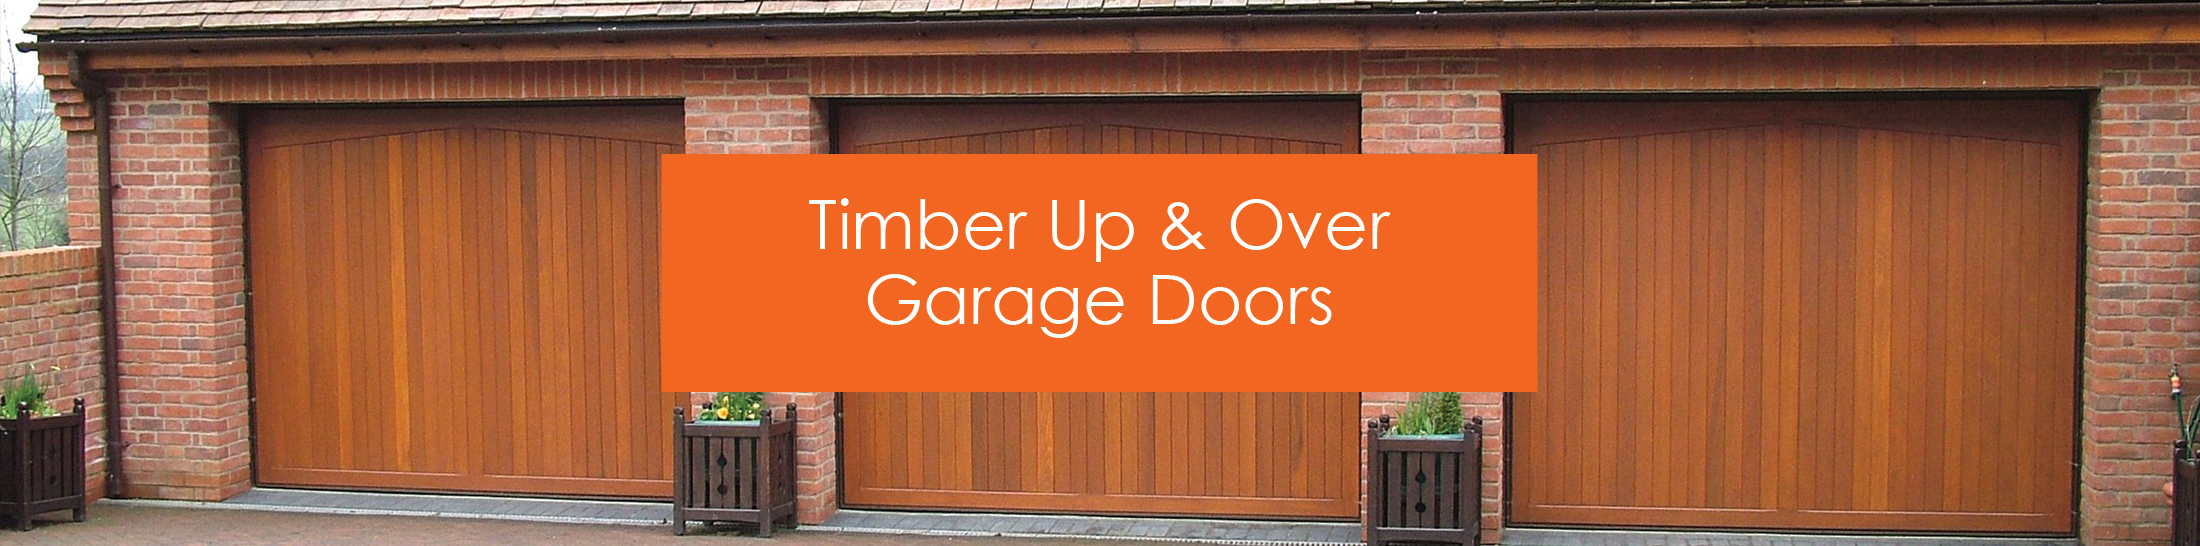 Timber up and over garage doors by The Garage Door Centre